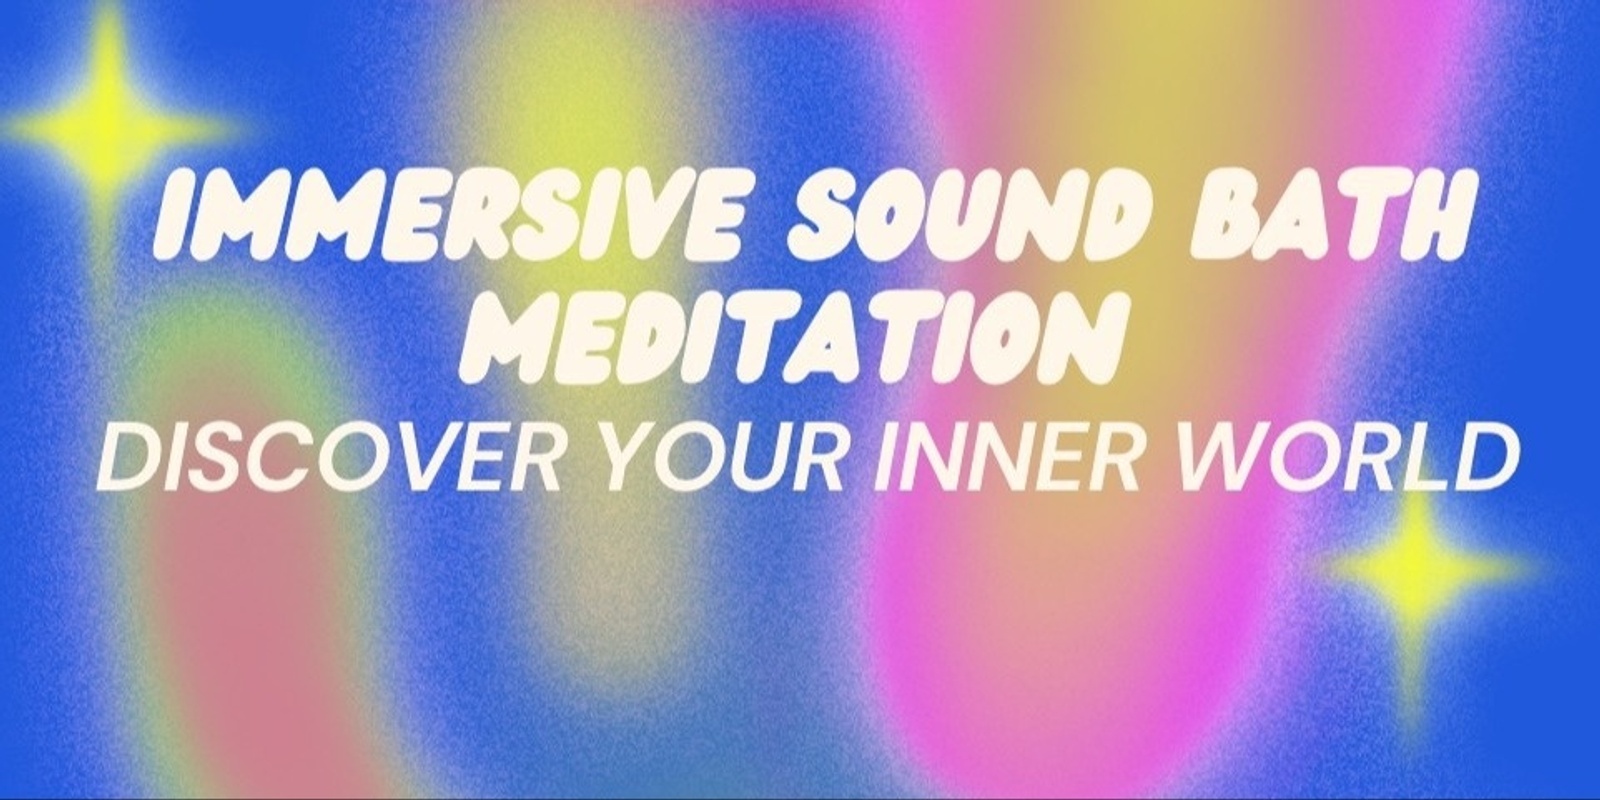 Banner image for Immersive Sound Bath Meditation - DISCOVER YOUR INNER WORLD